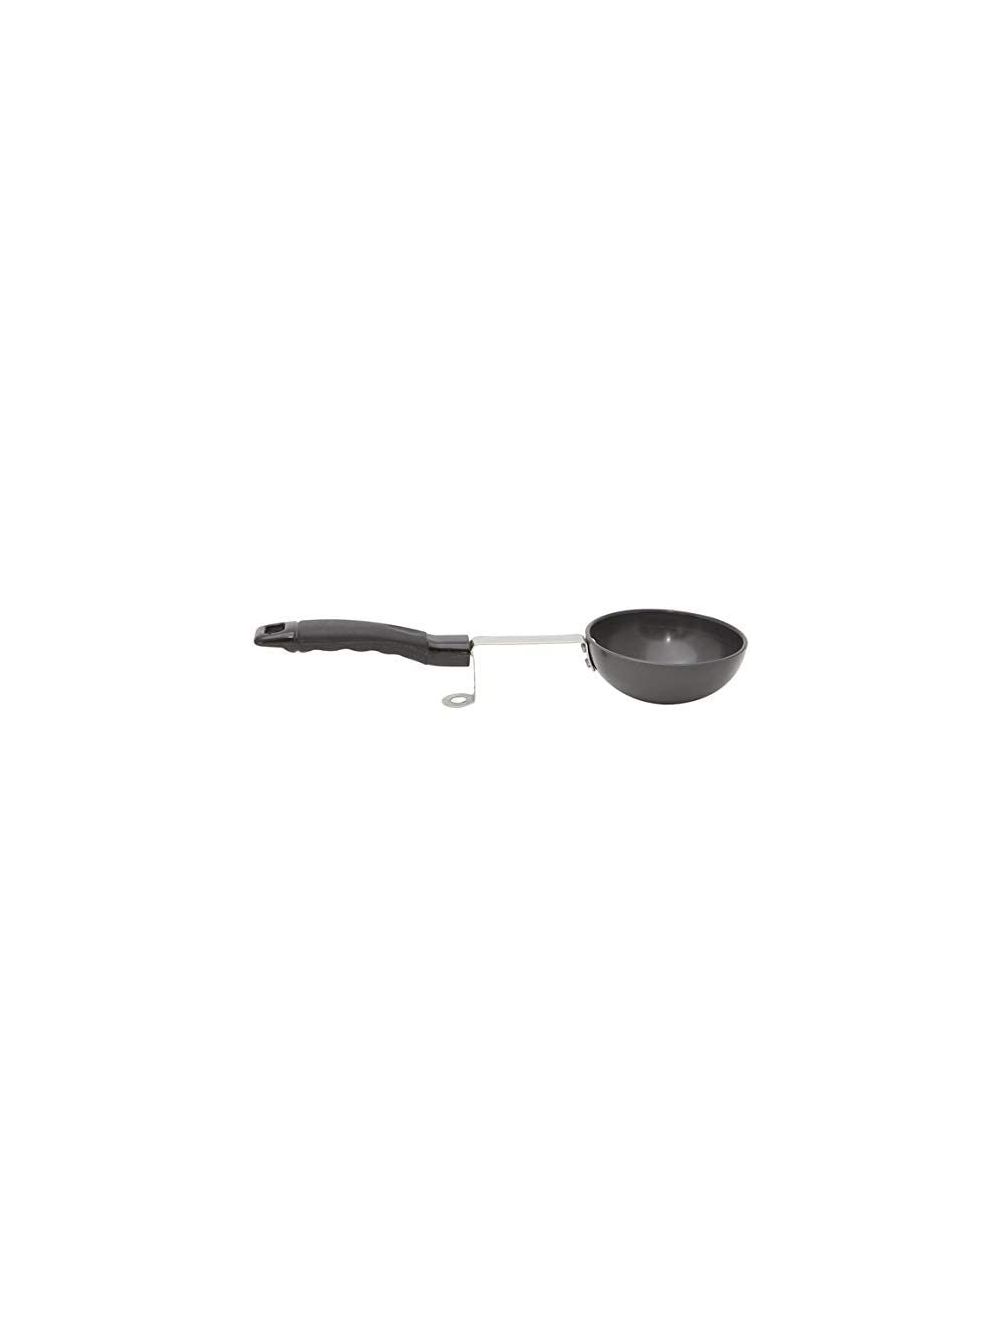 Raj Anodized Round Base Tempering Pan, Black, 9.5 cm, BBAV05